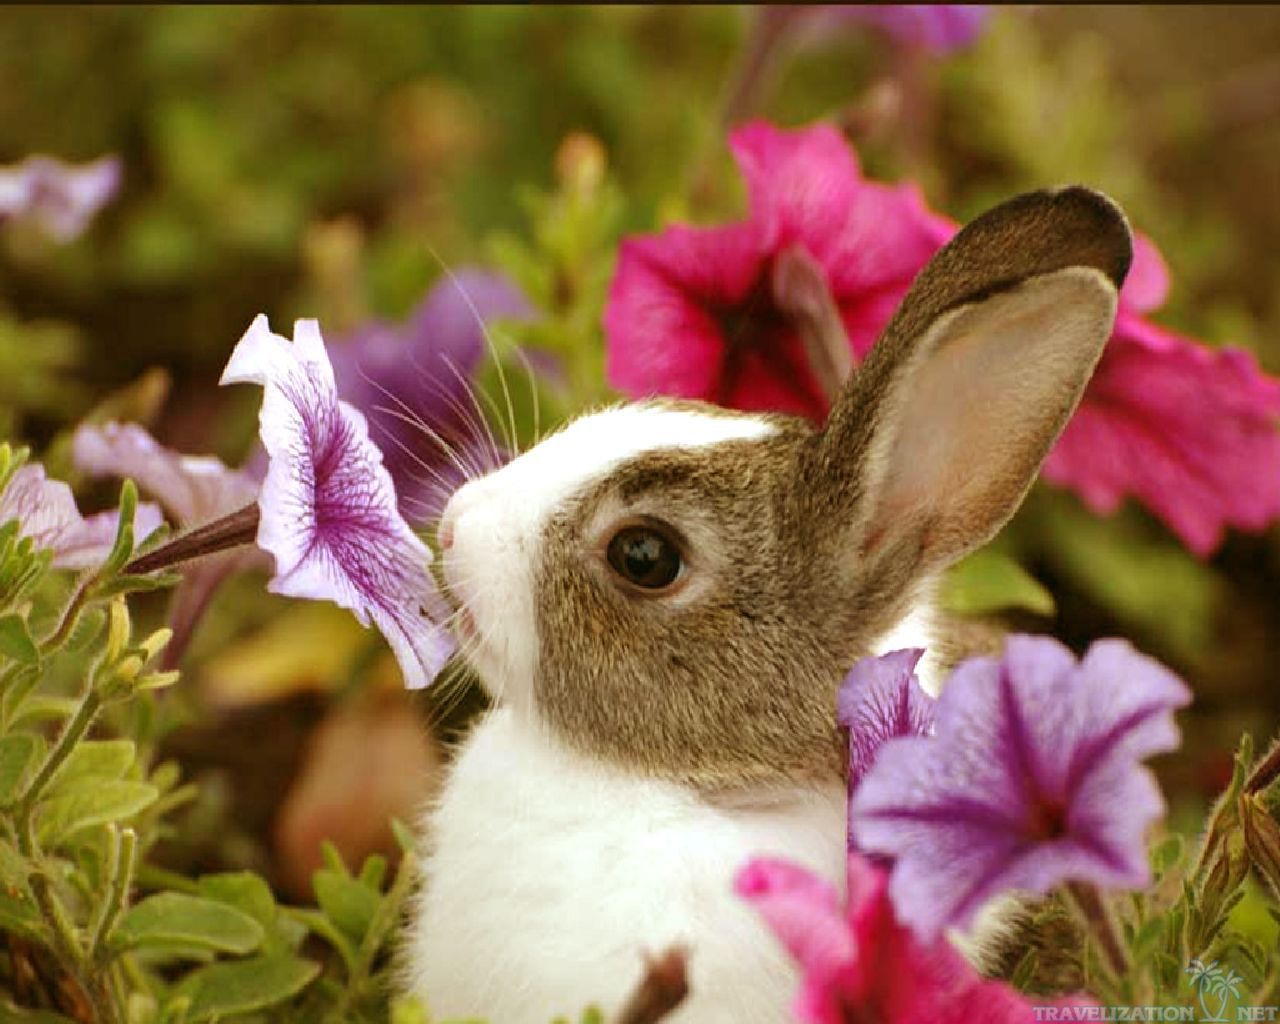 Cute baby bunnies, Cute baby animals .com